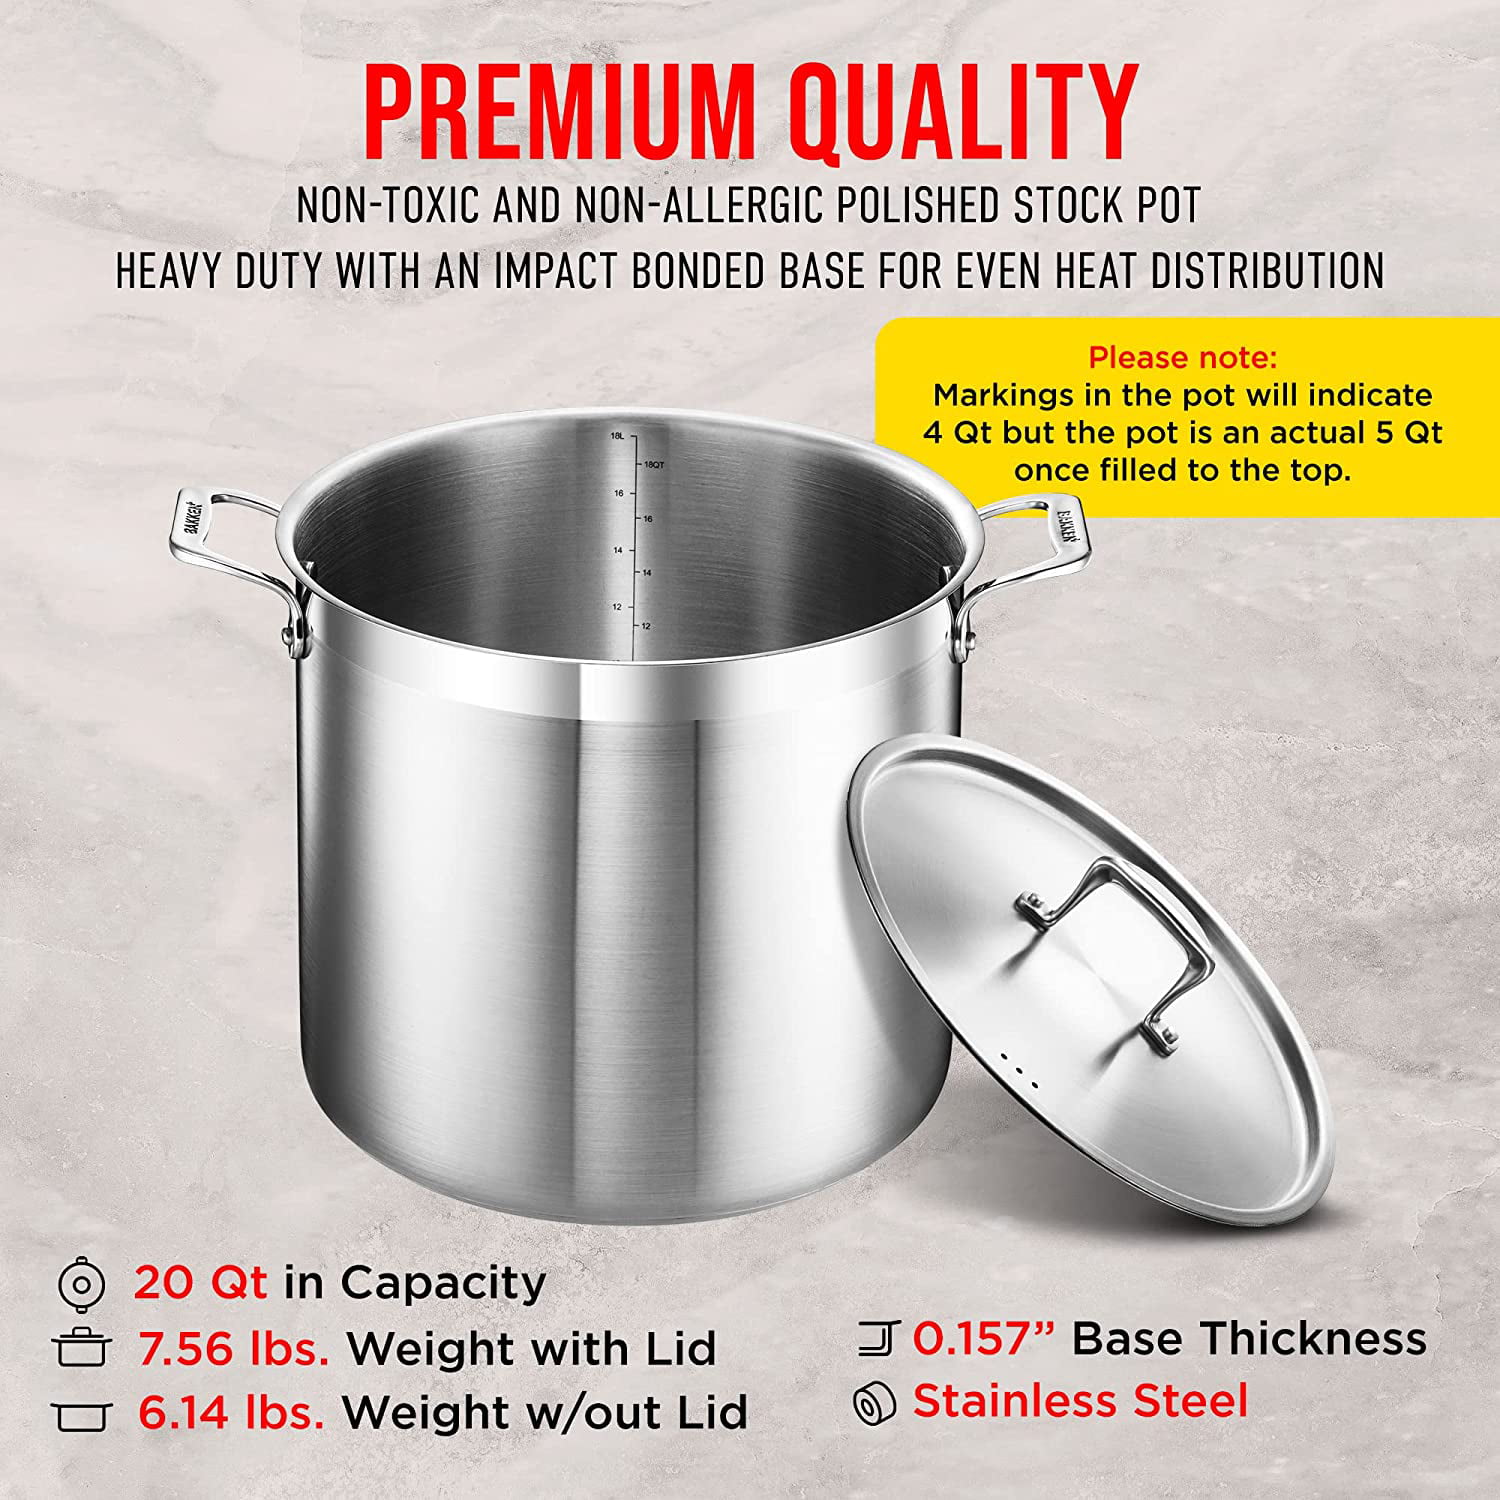 Stockpot 8 quart stock pot stainless stock pot with lid stainless steel  stock pot cooking pot induction stock pot - Yahoo Shopping